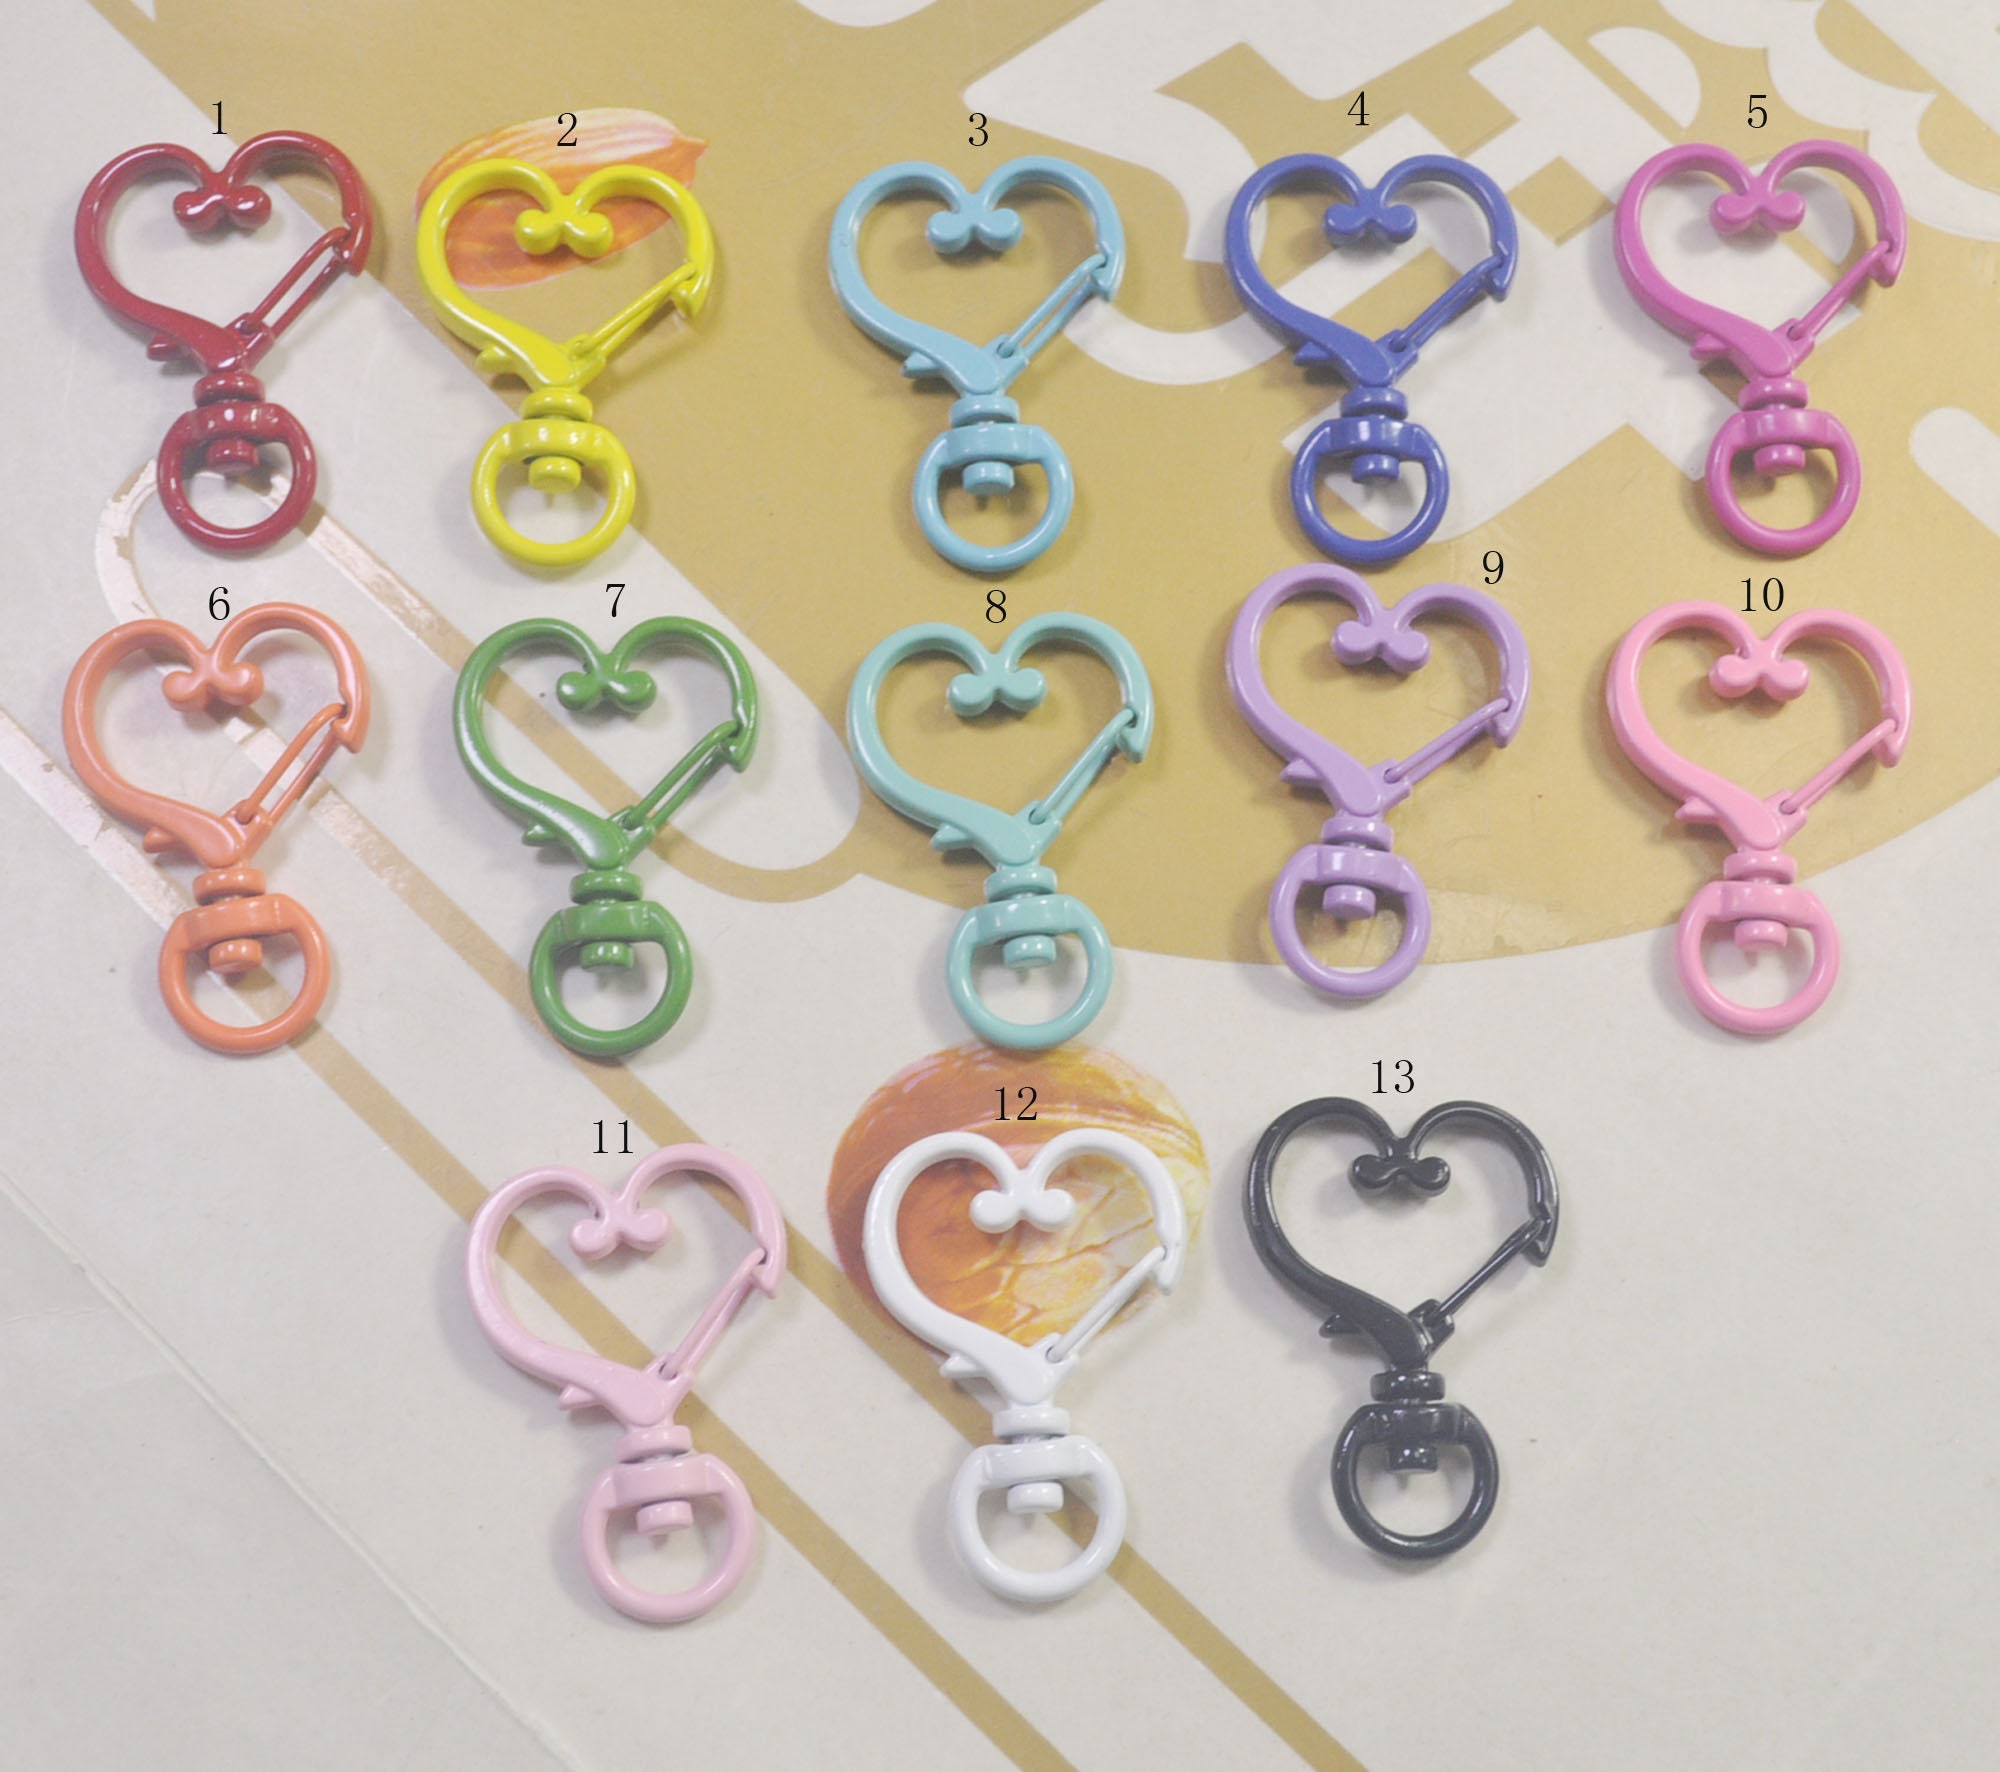 30Pcs Heart Shaped Split Key Rings,Crafts DIY Bahrain